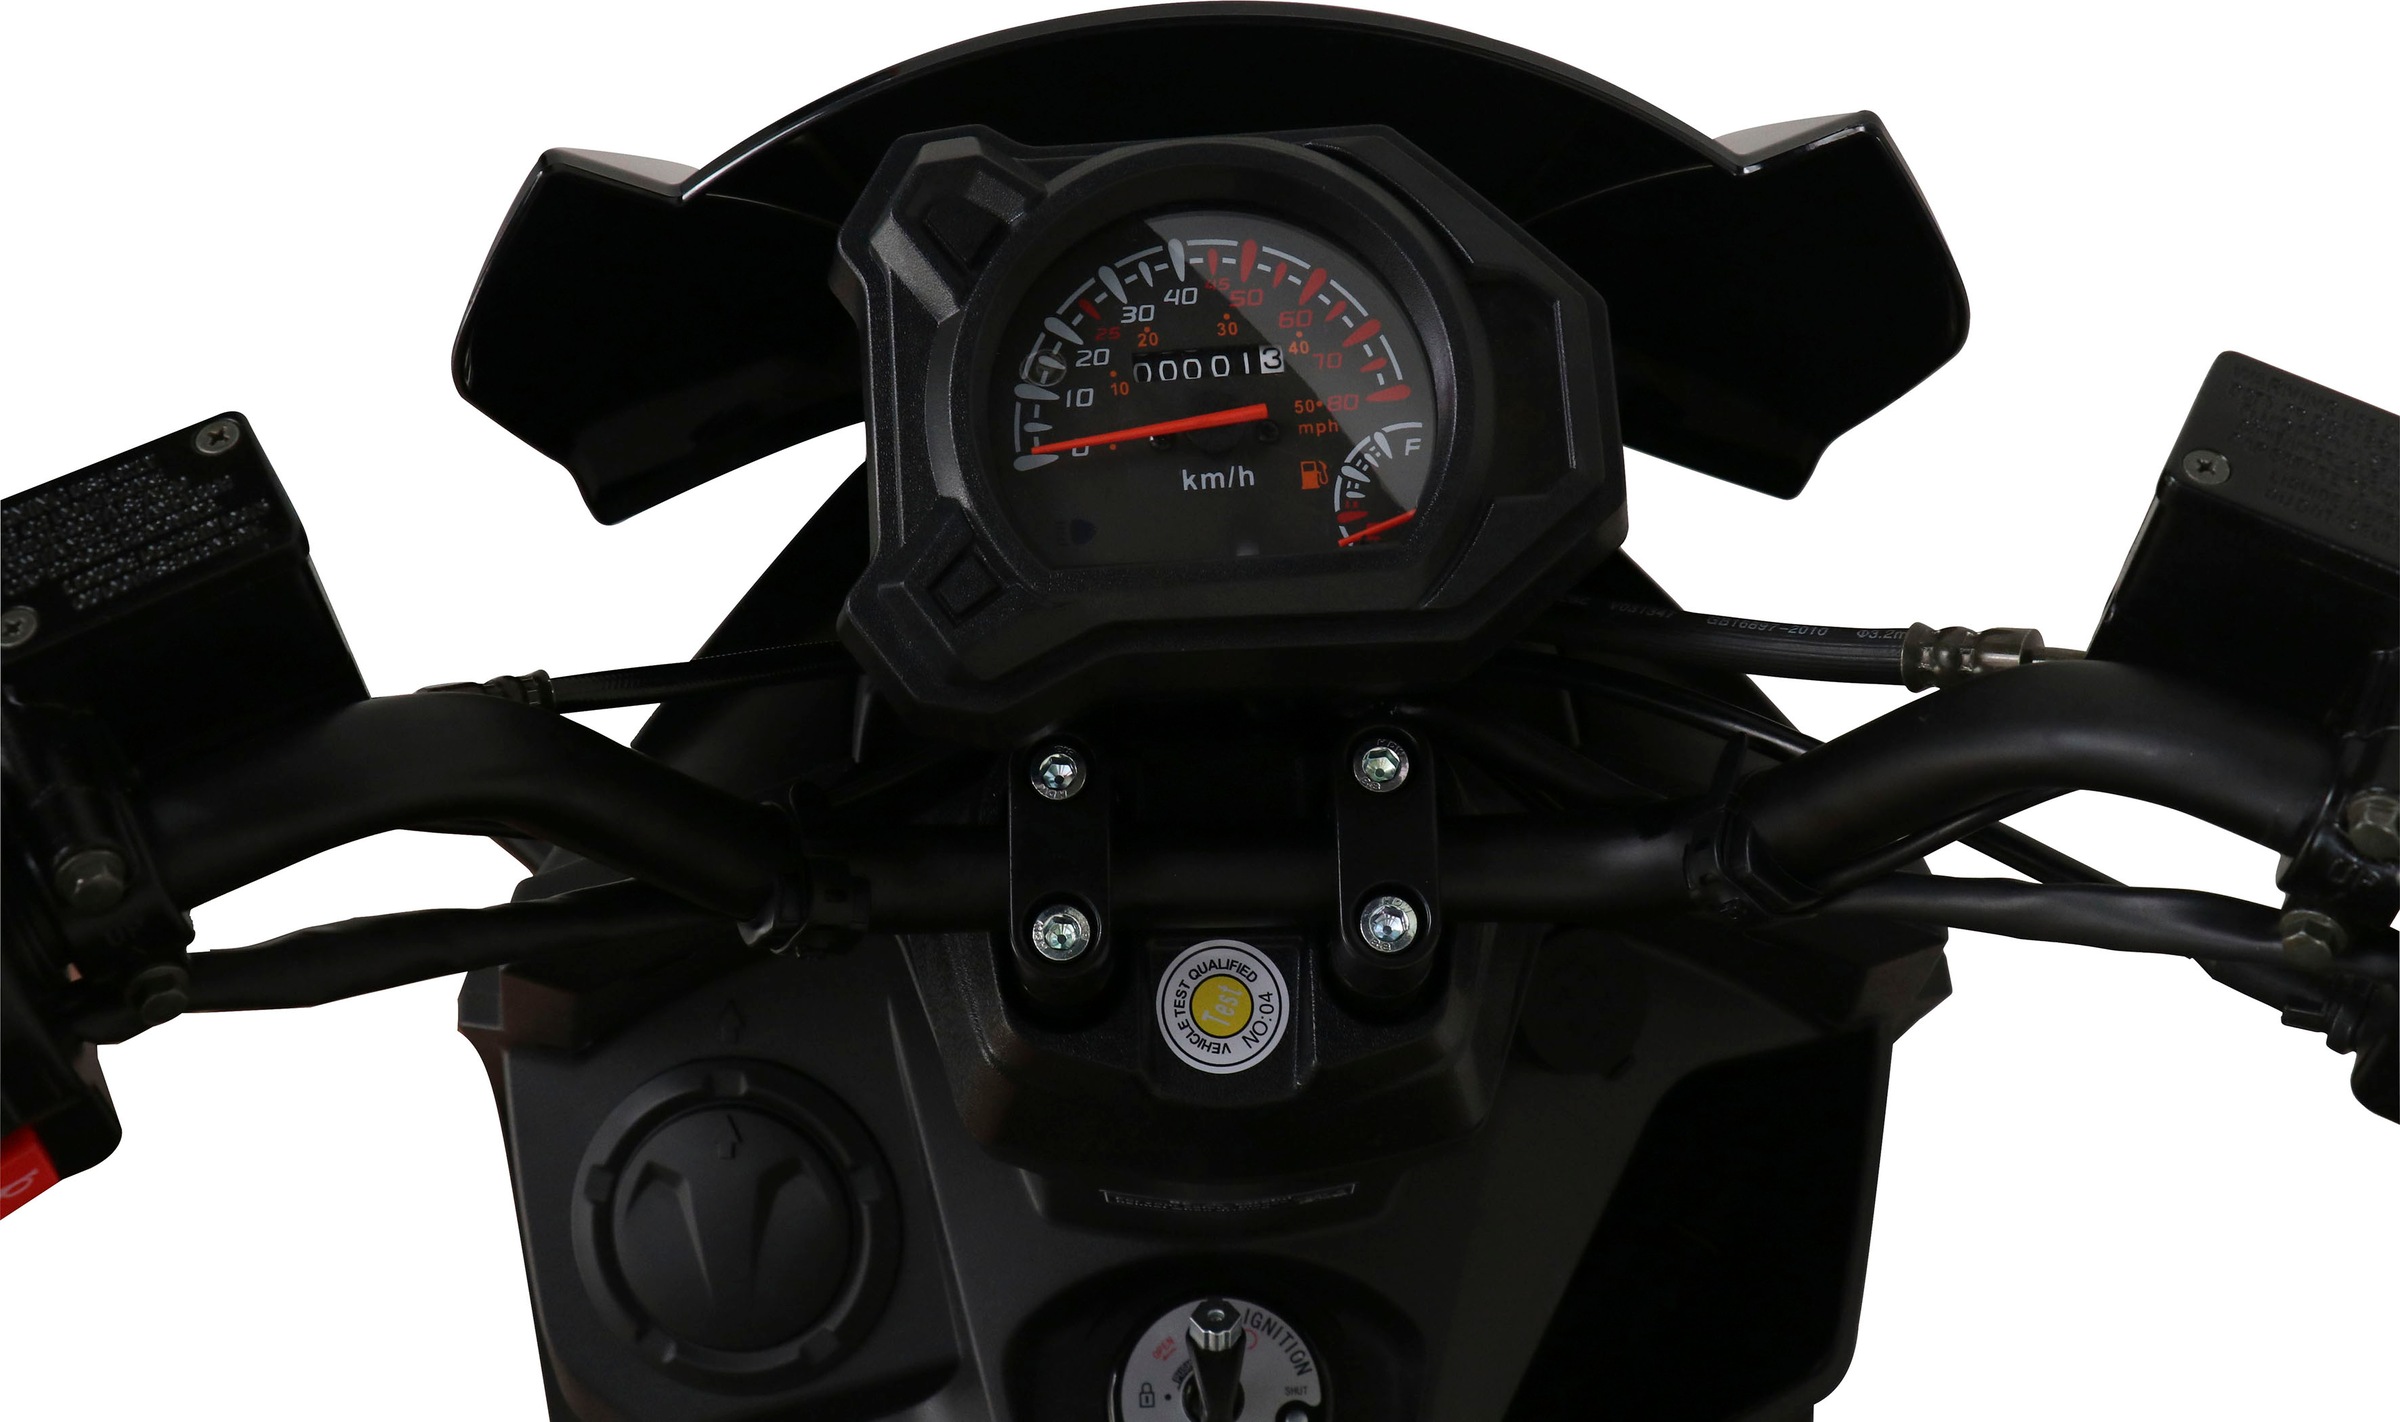 85 2.0 8,5 UNION 5, GT %Sale Euro im cm³, jetzt 125 55 125«, Cross-Concept Street km/h, »PX PS Motorroller